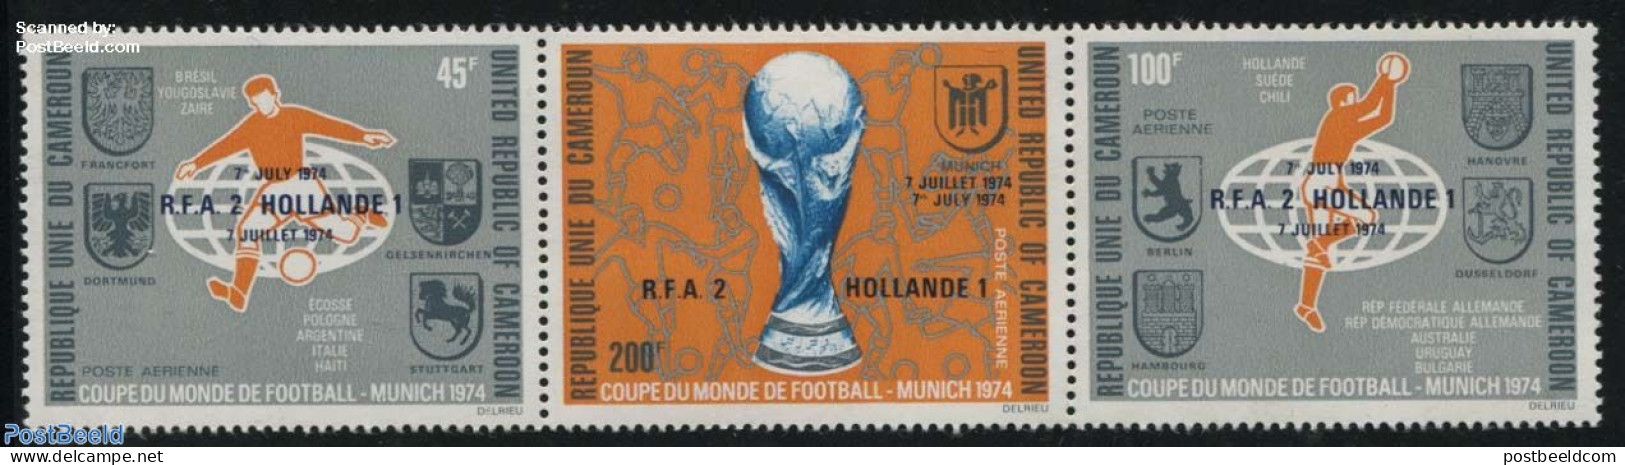 Cameroon 1974 Football Winners 3v [::], Mint NH, History - Sport - Netherlands & Dutch - Football - Geographie